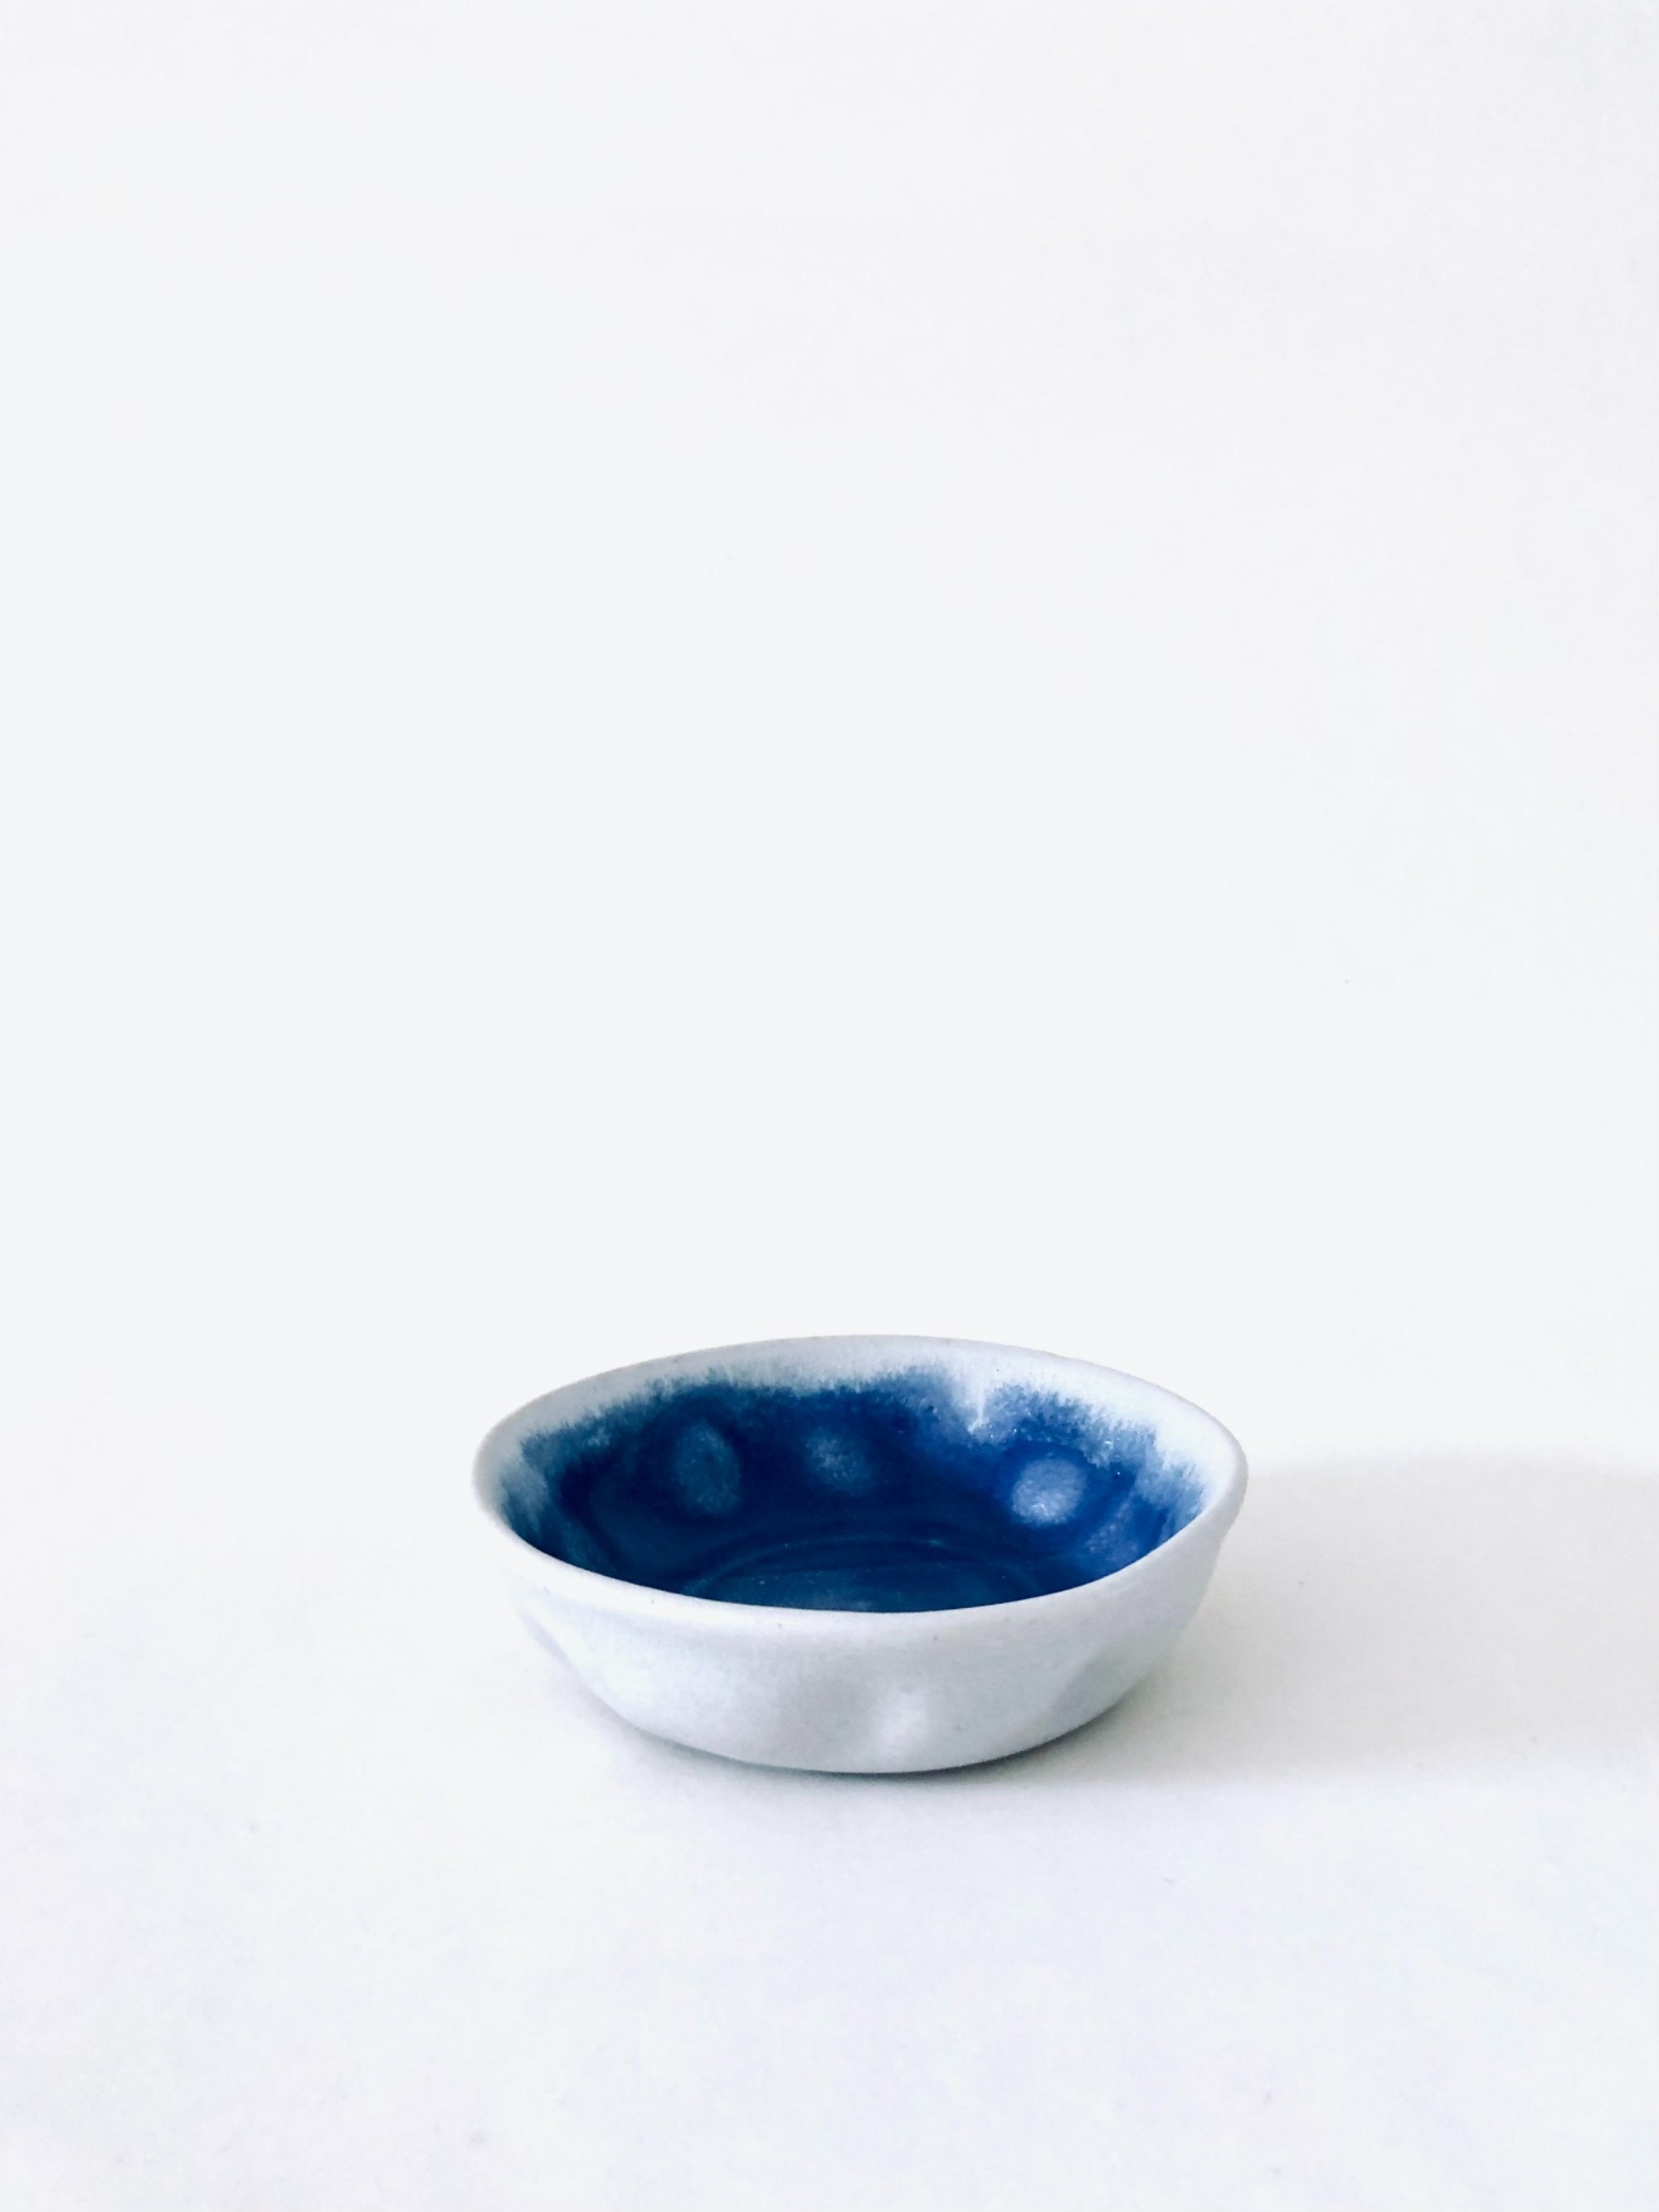 Winter Blue Rice Bowls by Vivian Lam